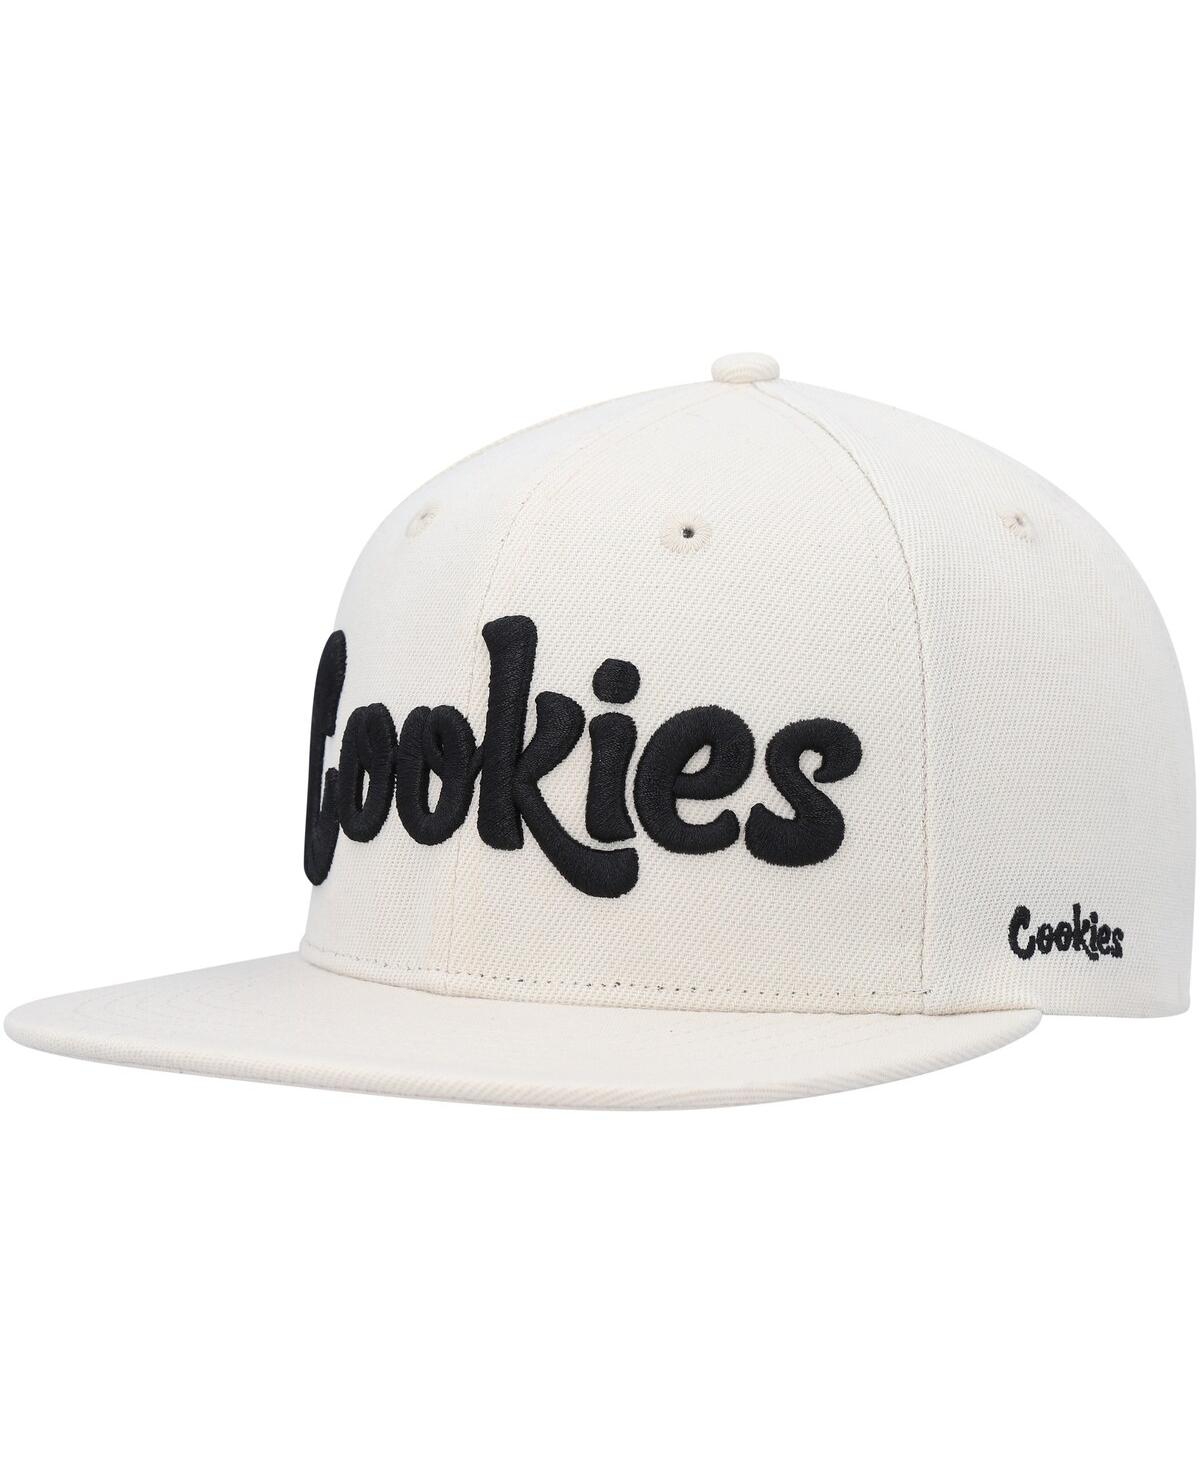 Cookies Men's  Cream Original Logo Snapback Hat